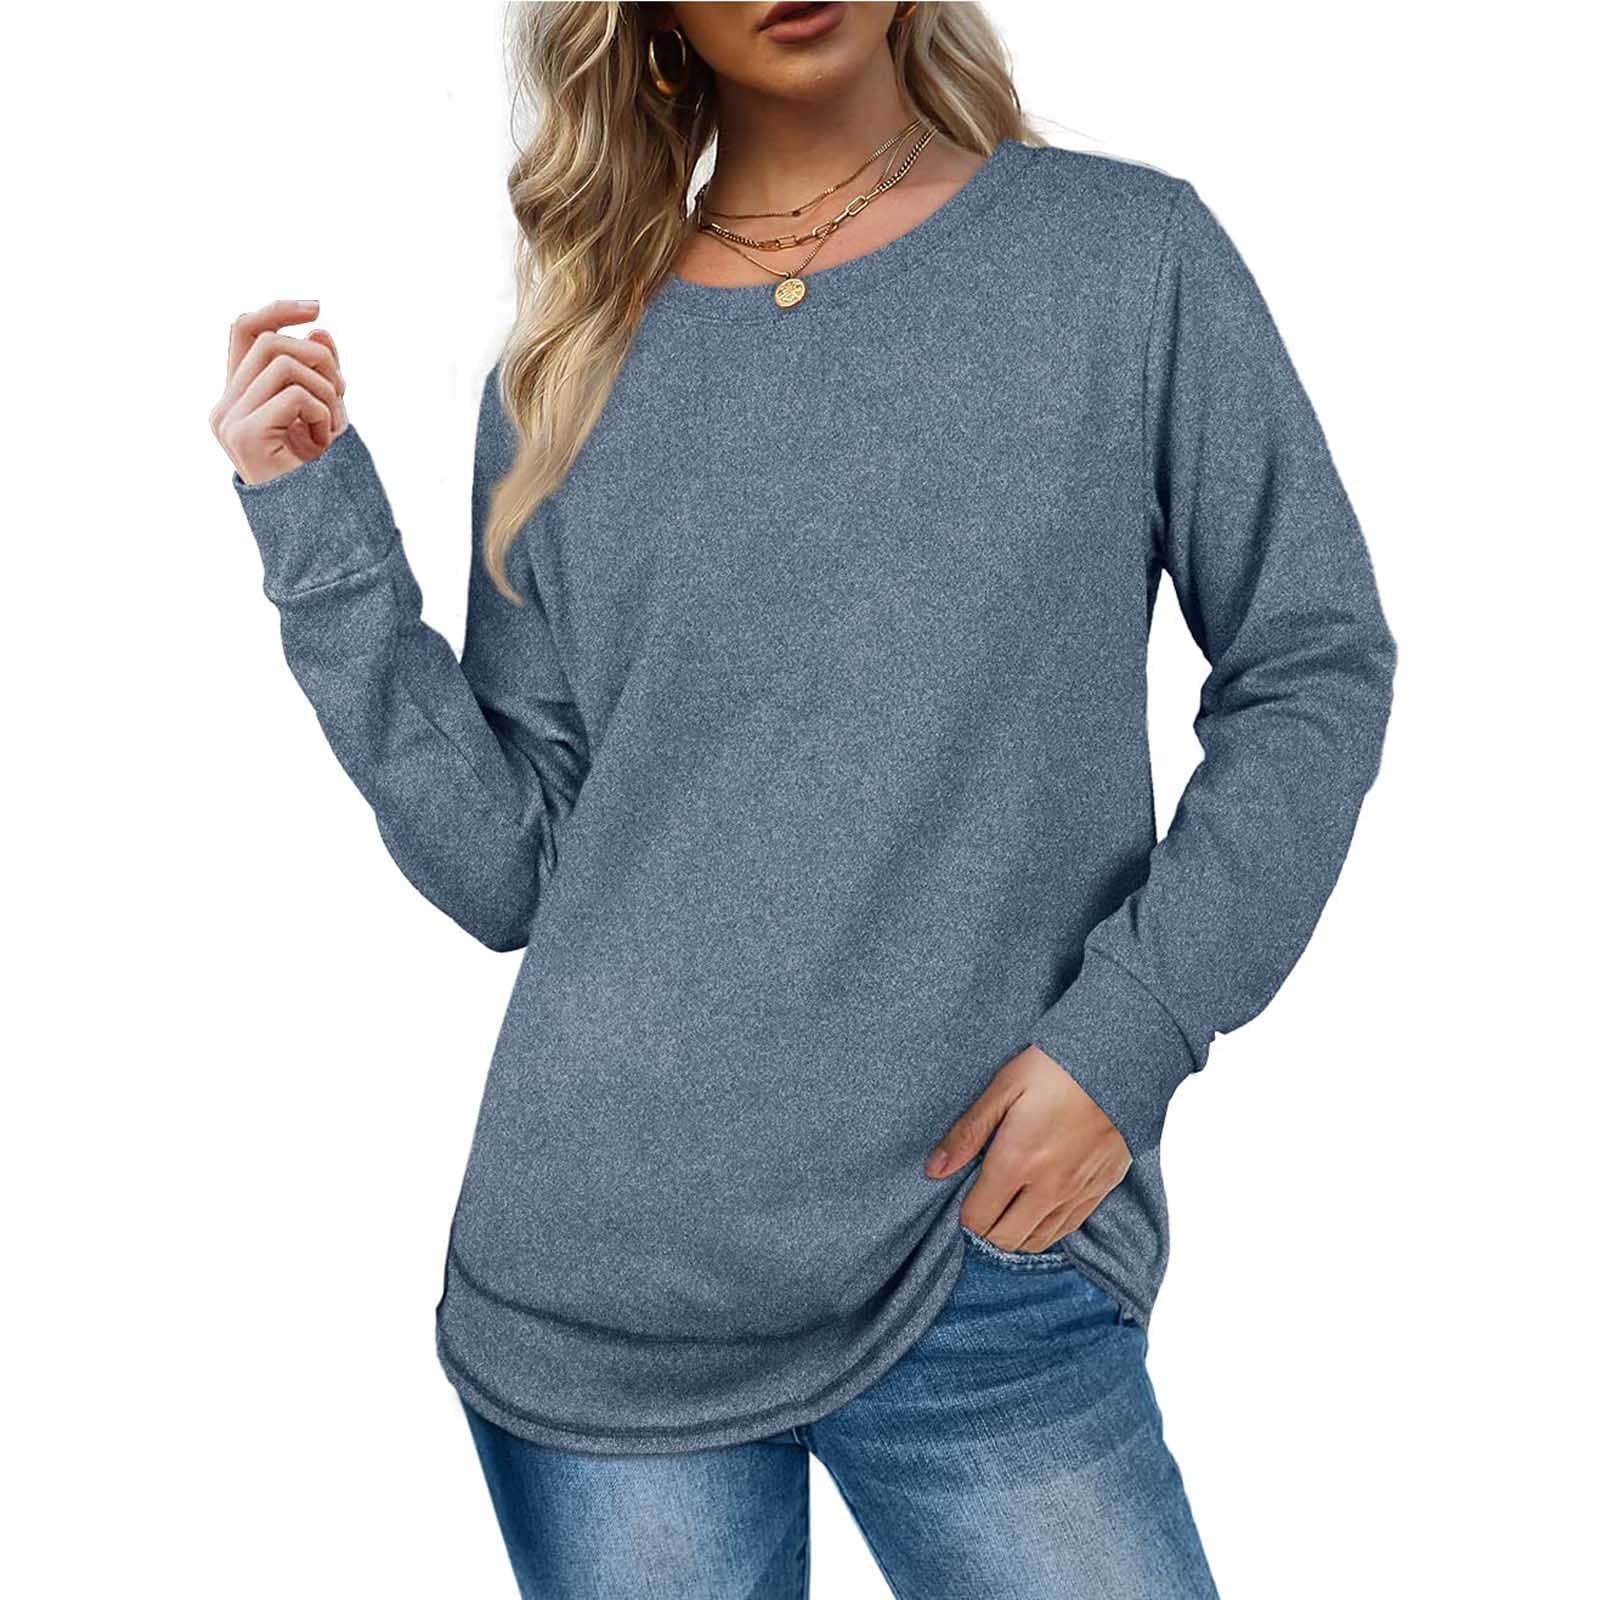 LEZMORE Sweatshirts for Women Crewneck Casual Long Sleeve Shirts Tunic ...